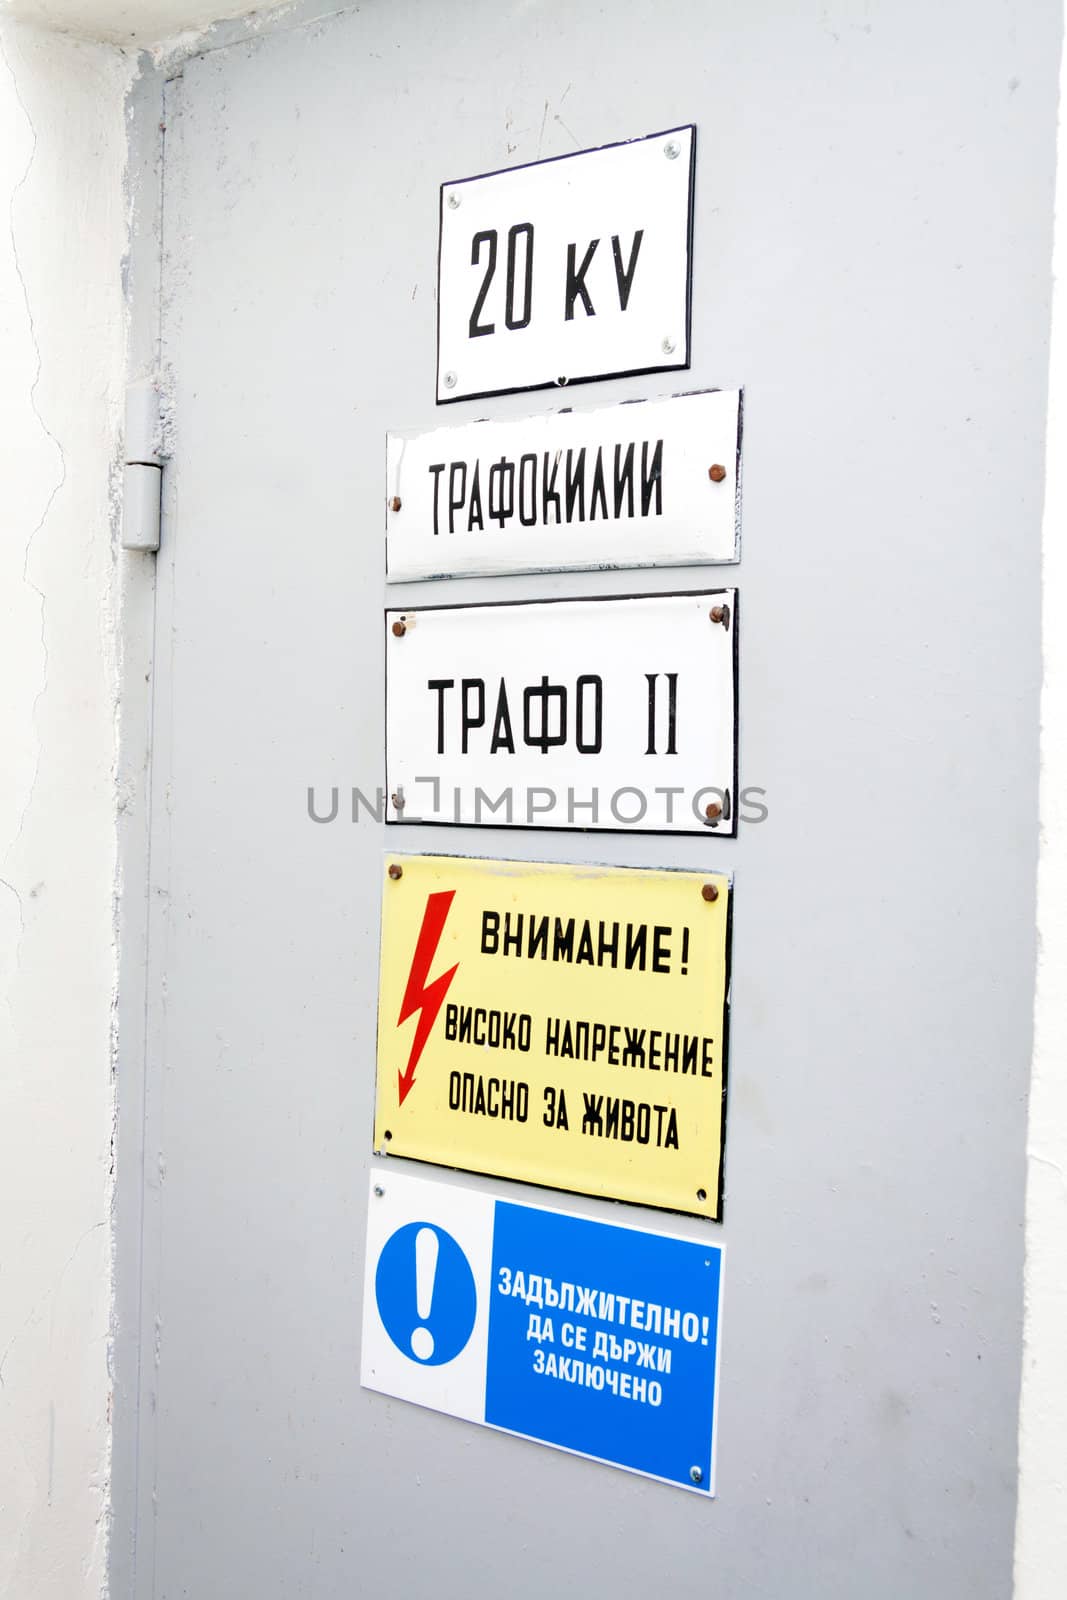 Metal door with high voltage warning sign by Lamarinx